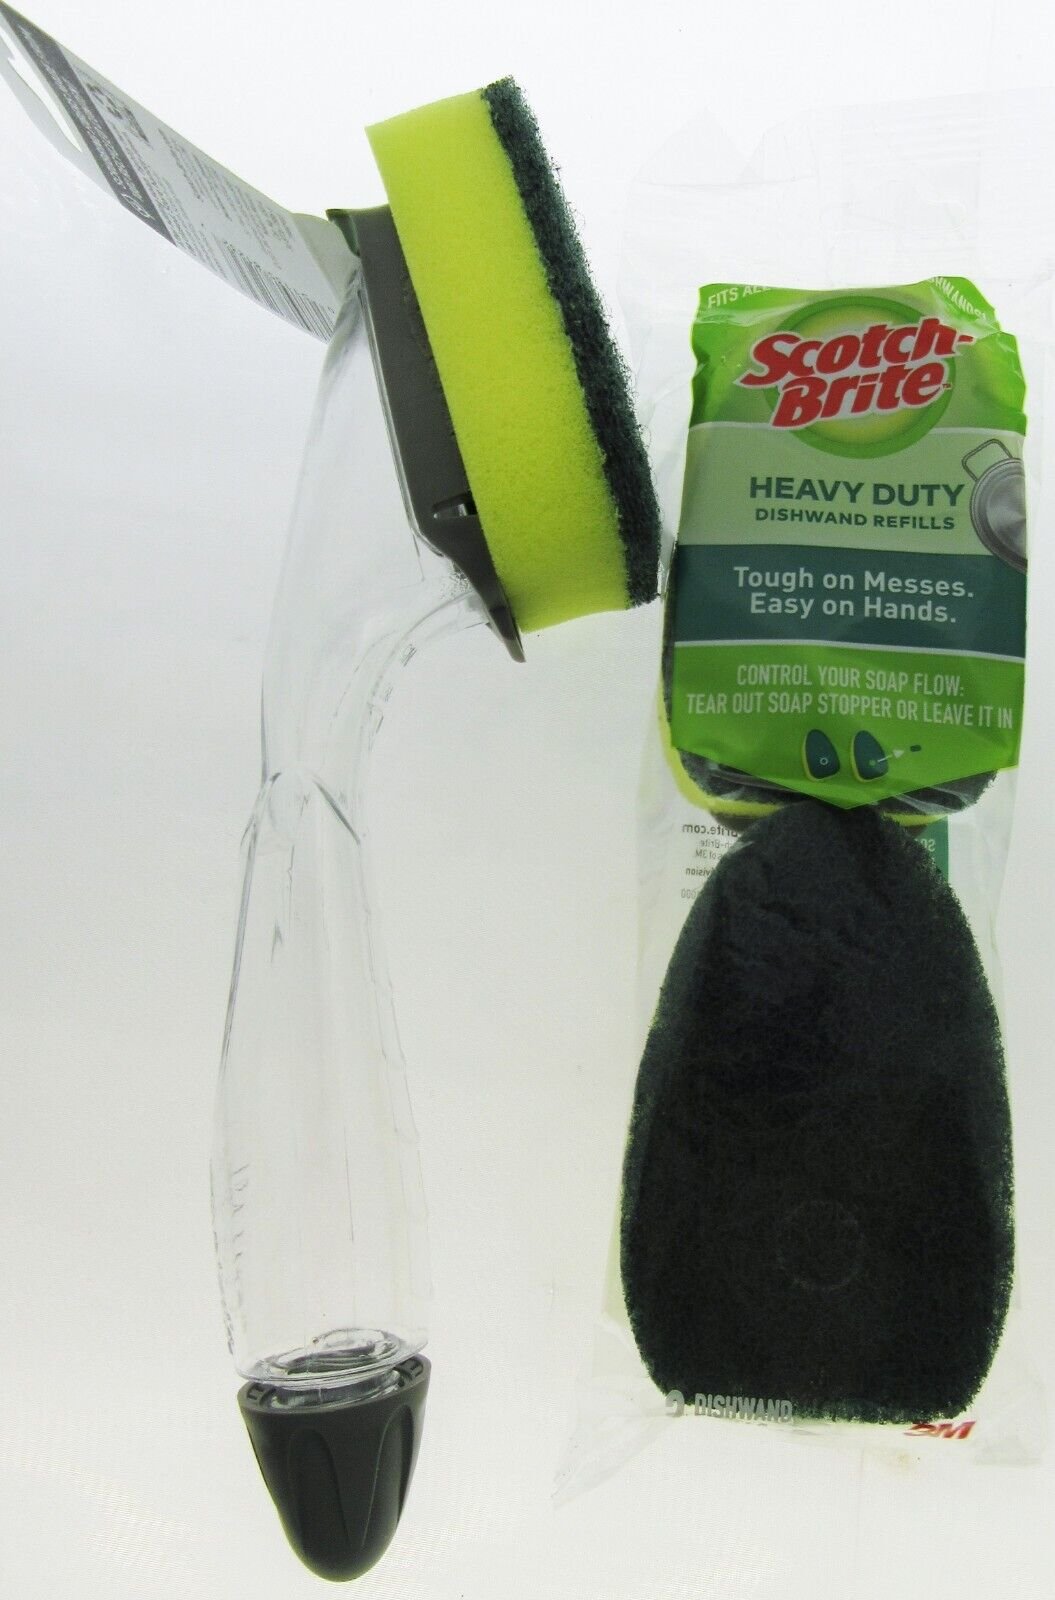 Scotch-Brite Dishwand Soap Despensing Heavy Duty Scrubber Refills Kitchen Scoury